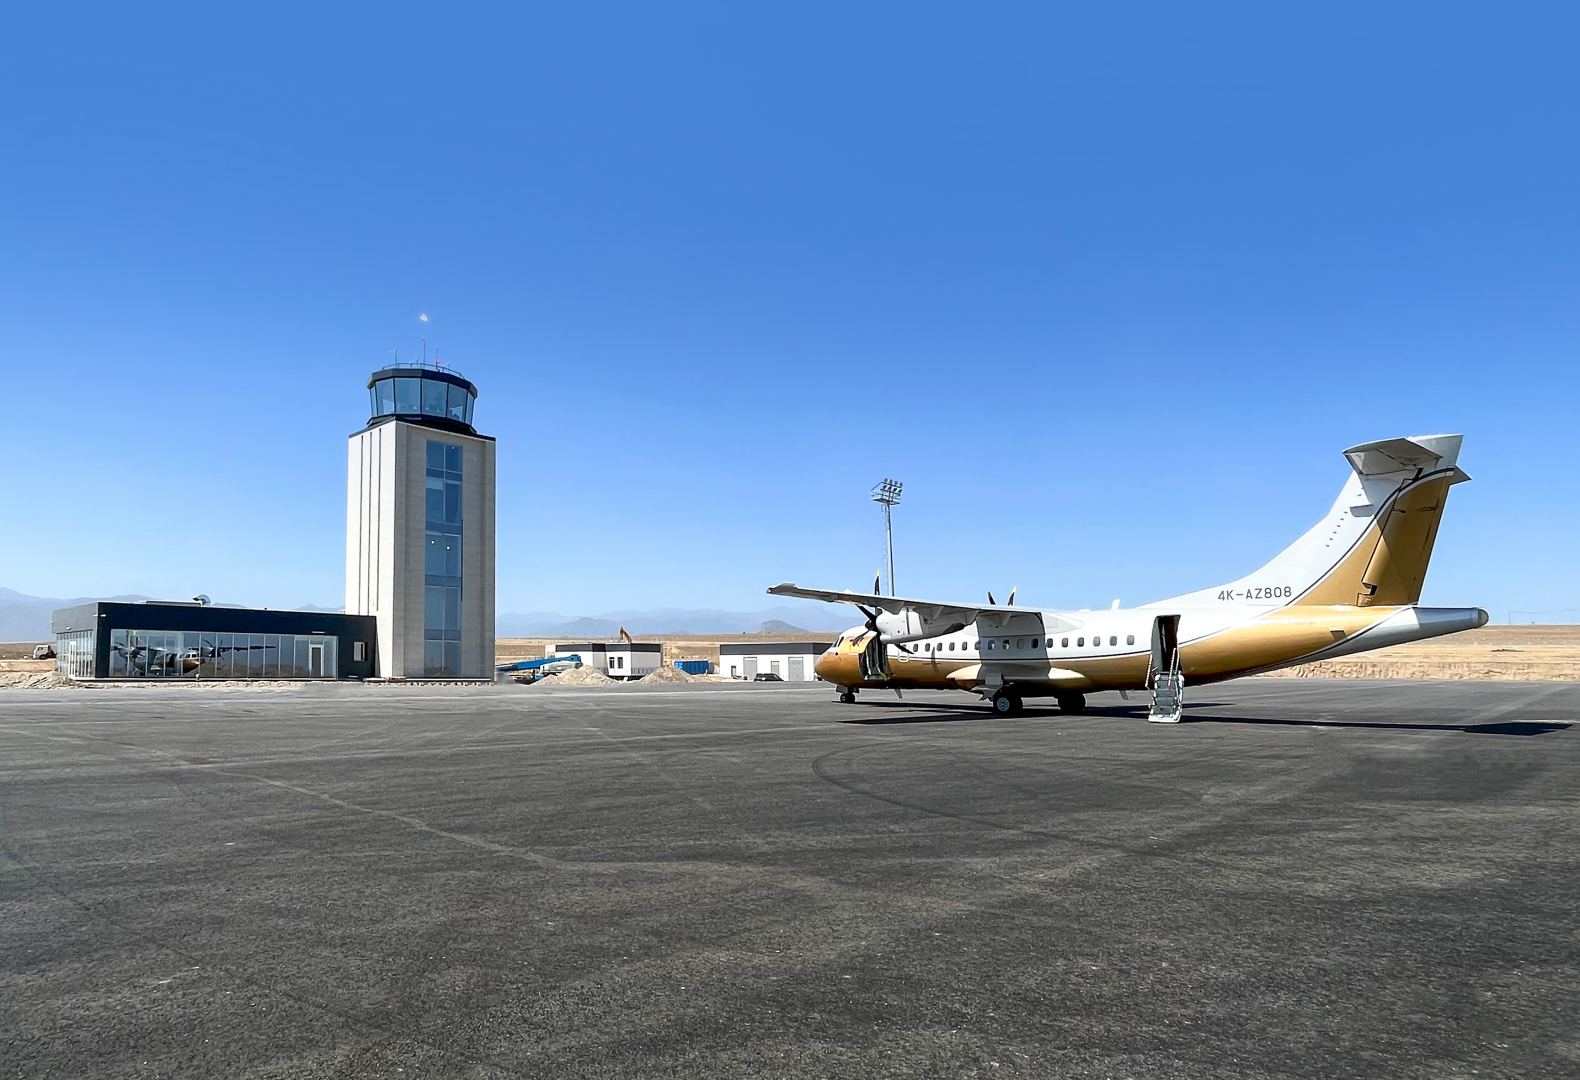 Azerbaijan's Zangilan Airport receives international status